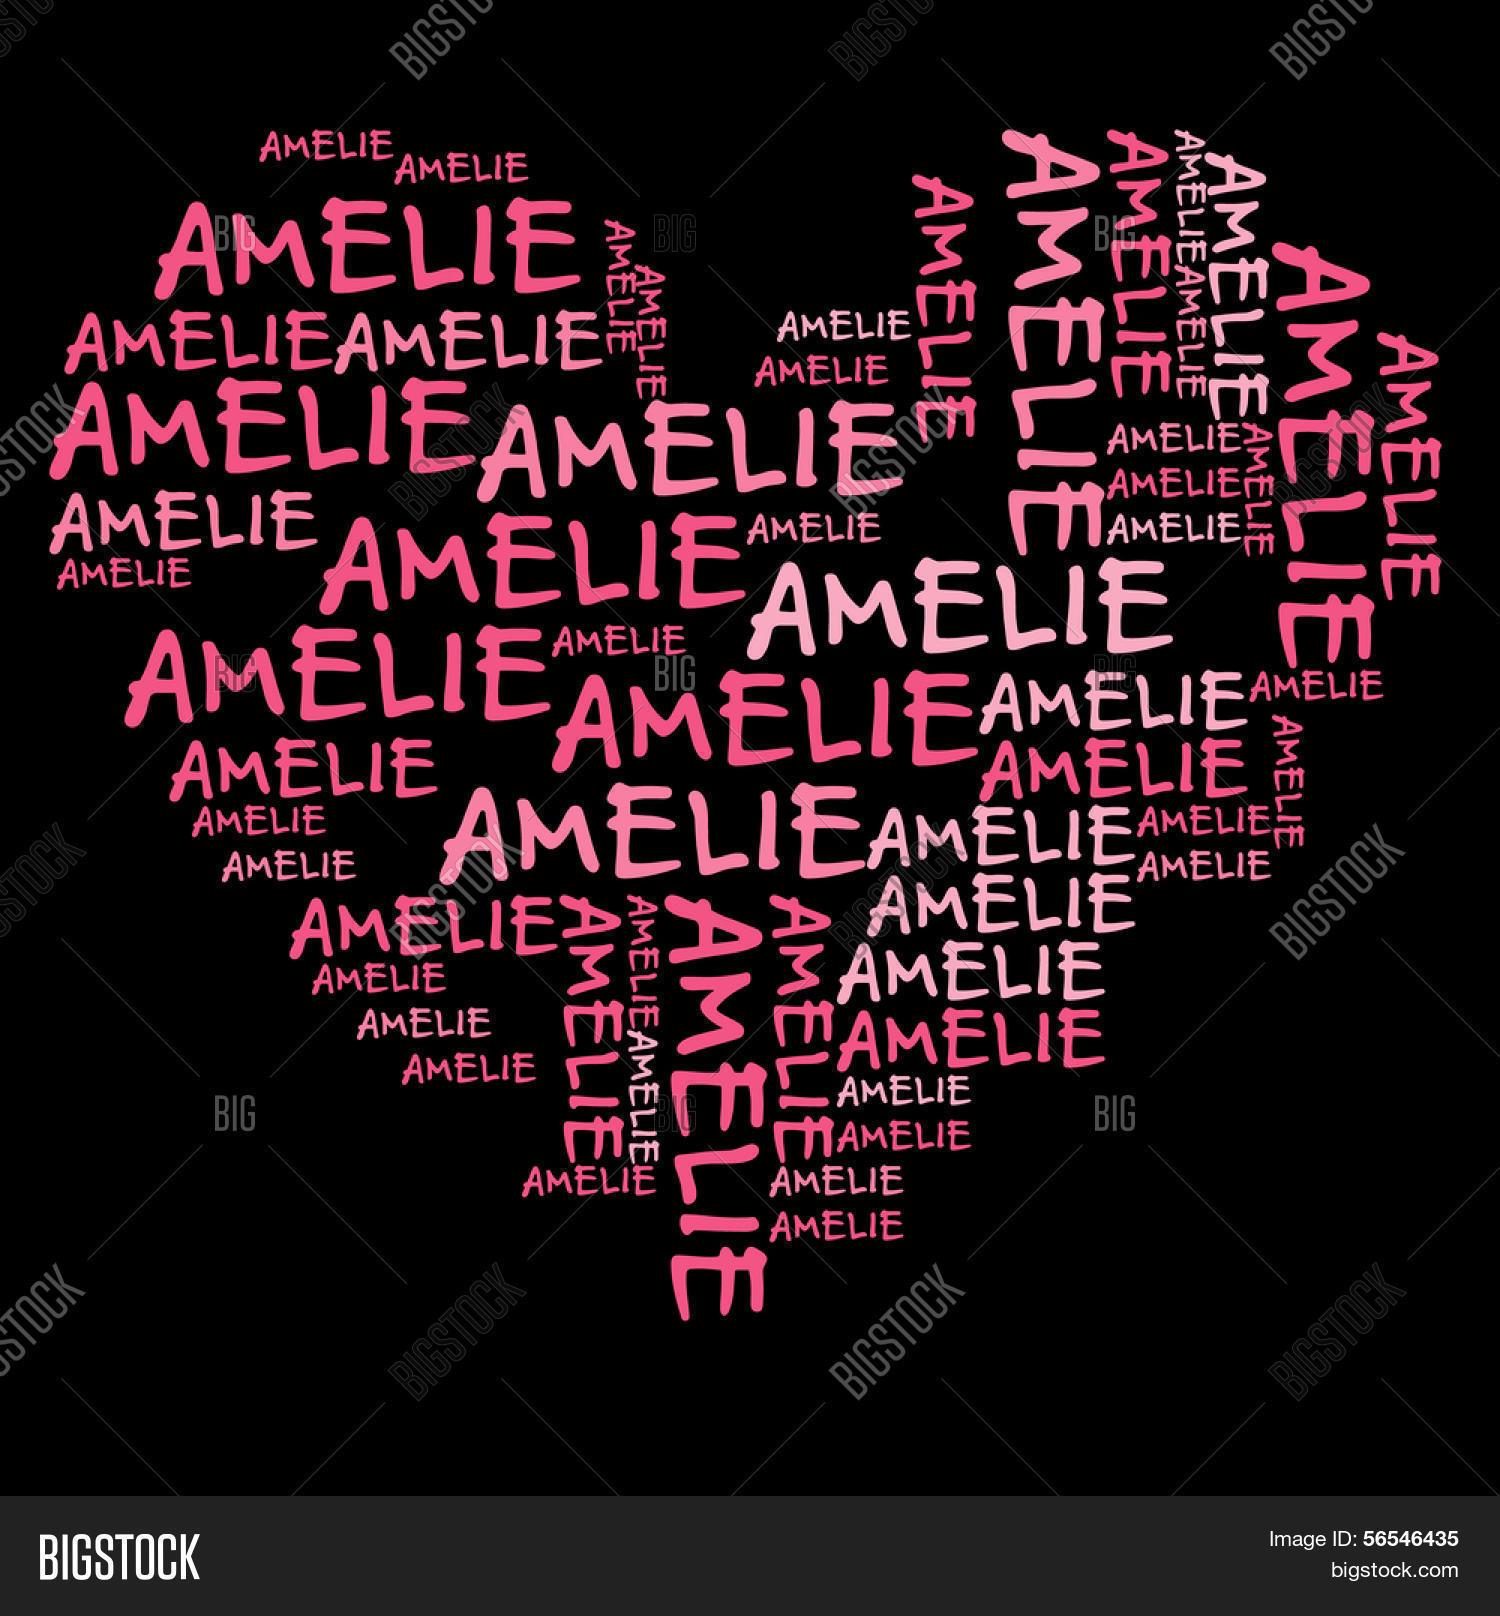 Amelie Background